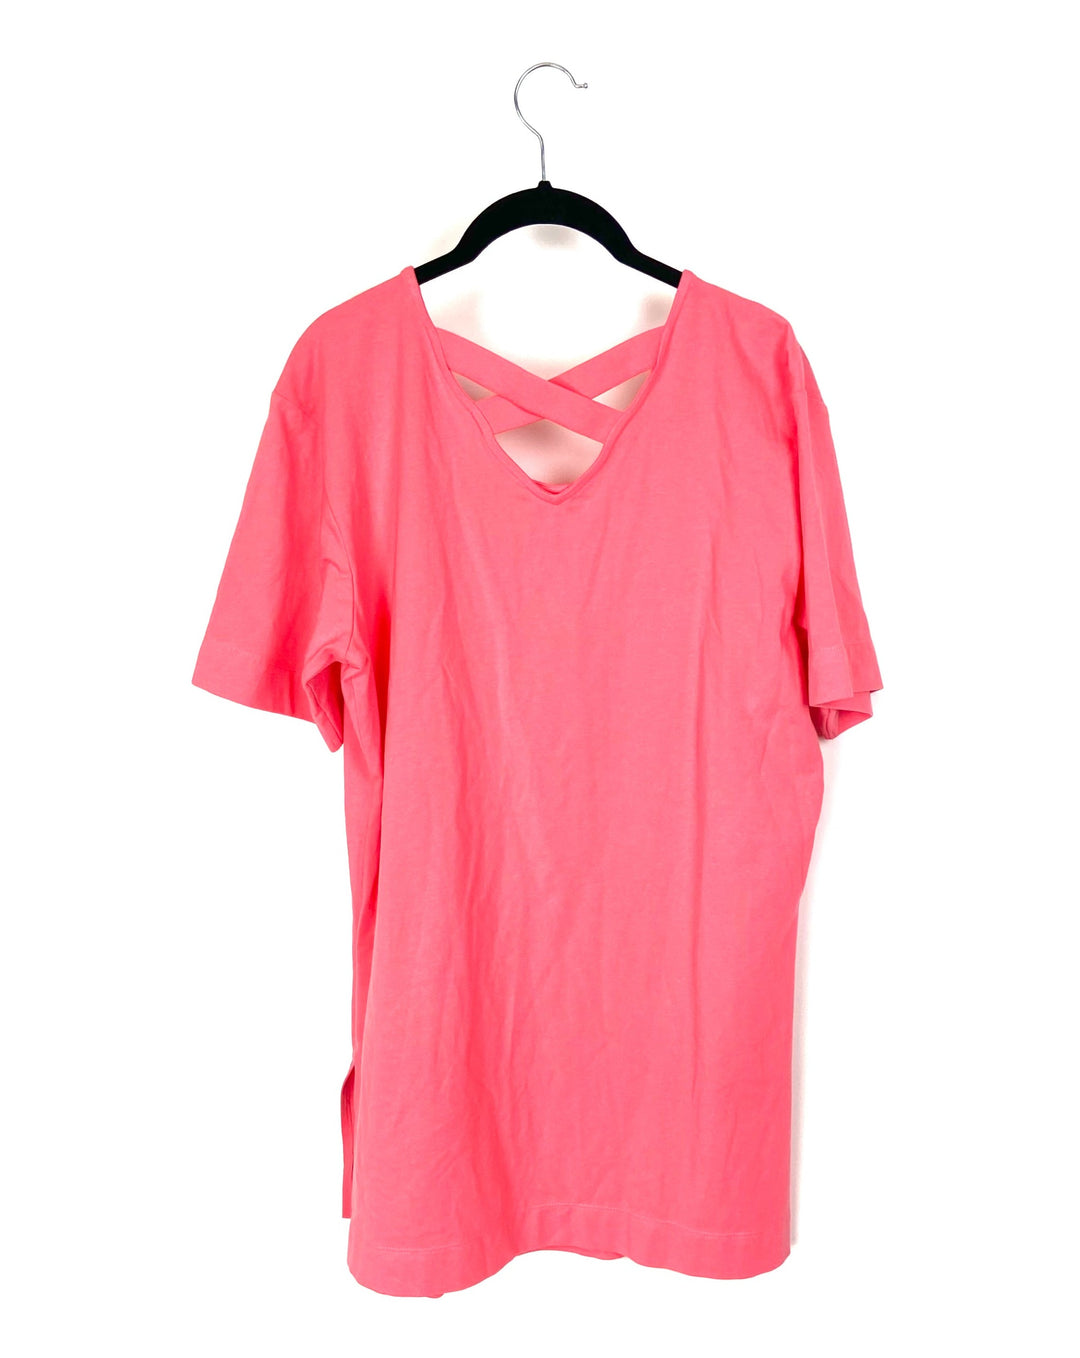 Pink T-Shirt Tunic with Criss Cross Back - Small/Medium